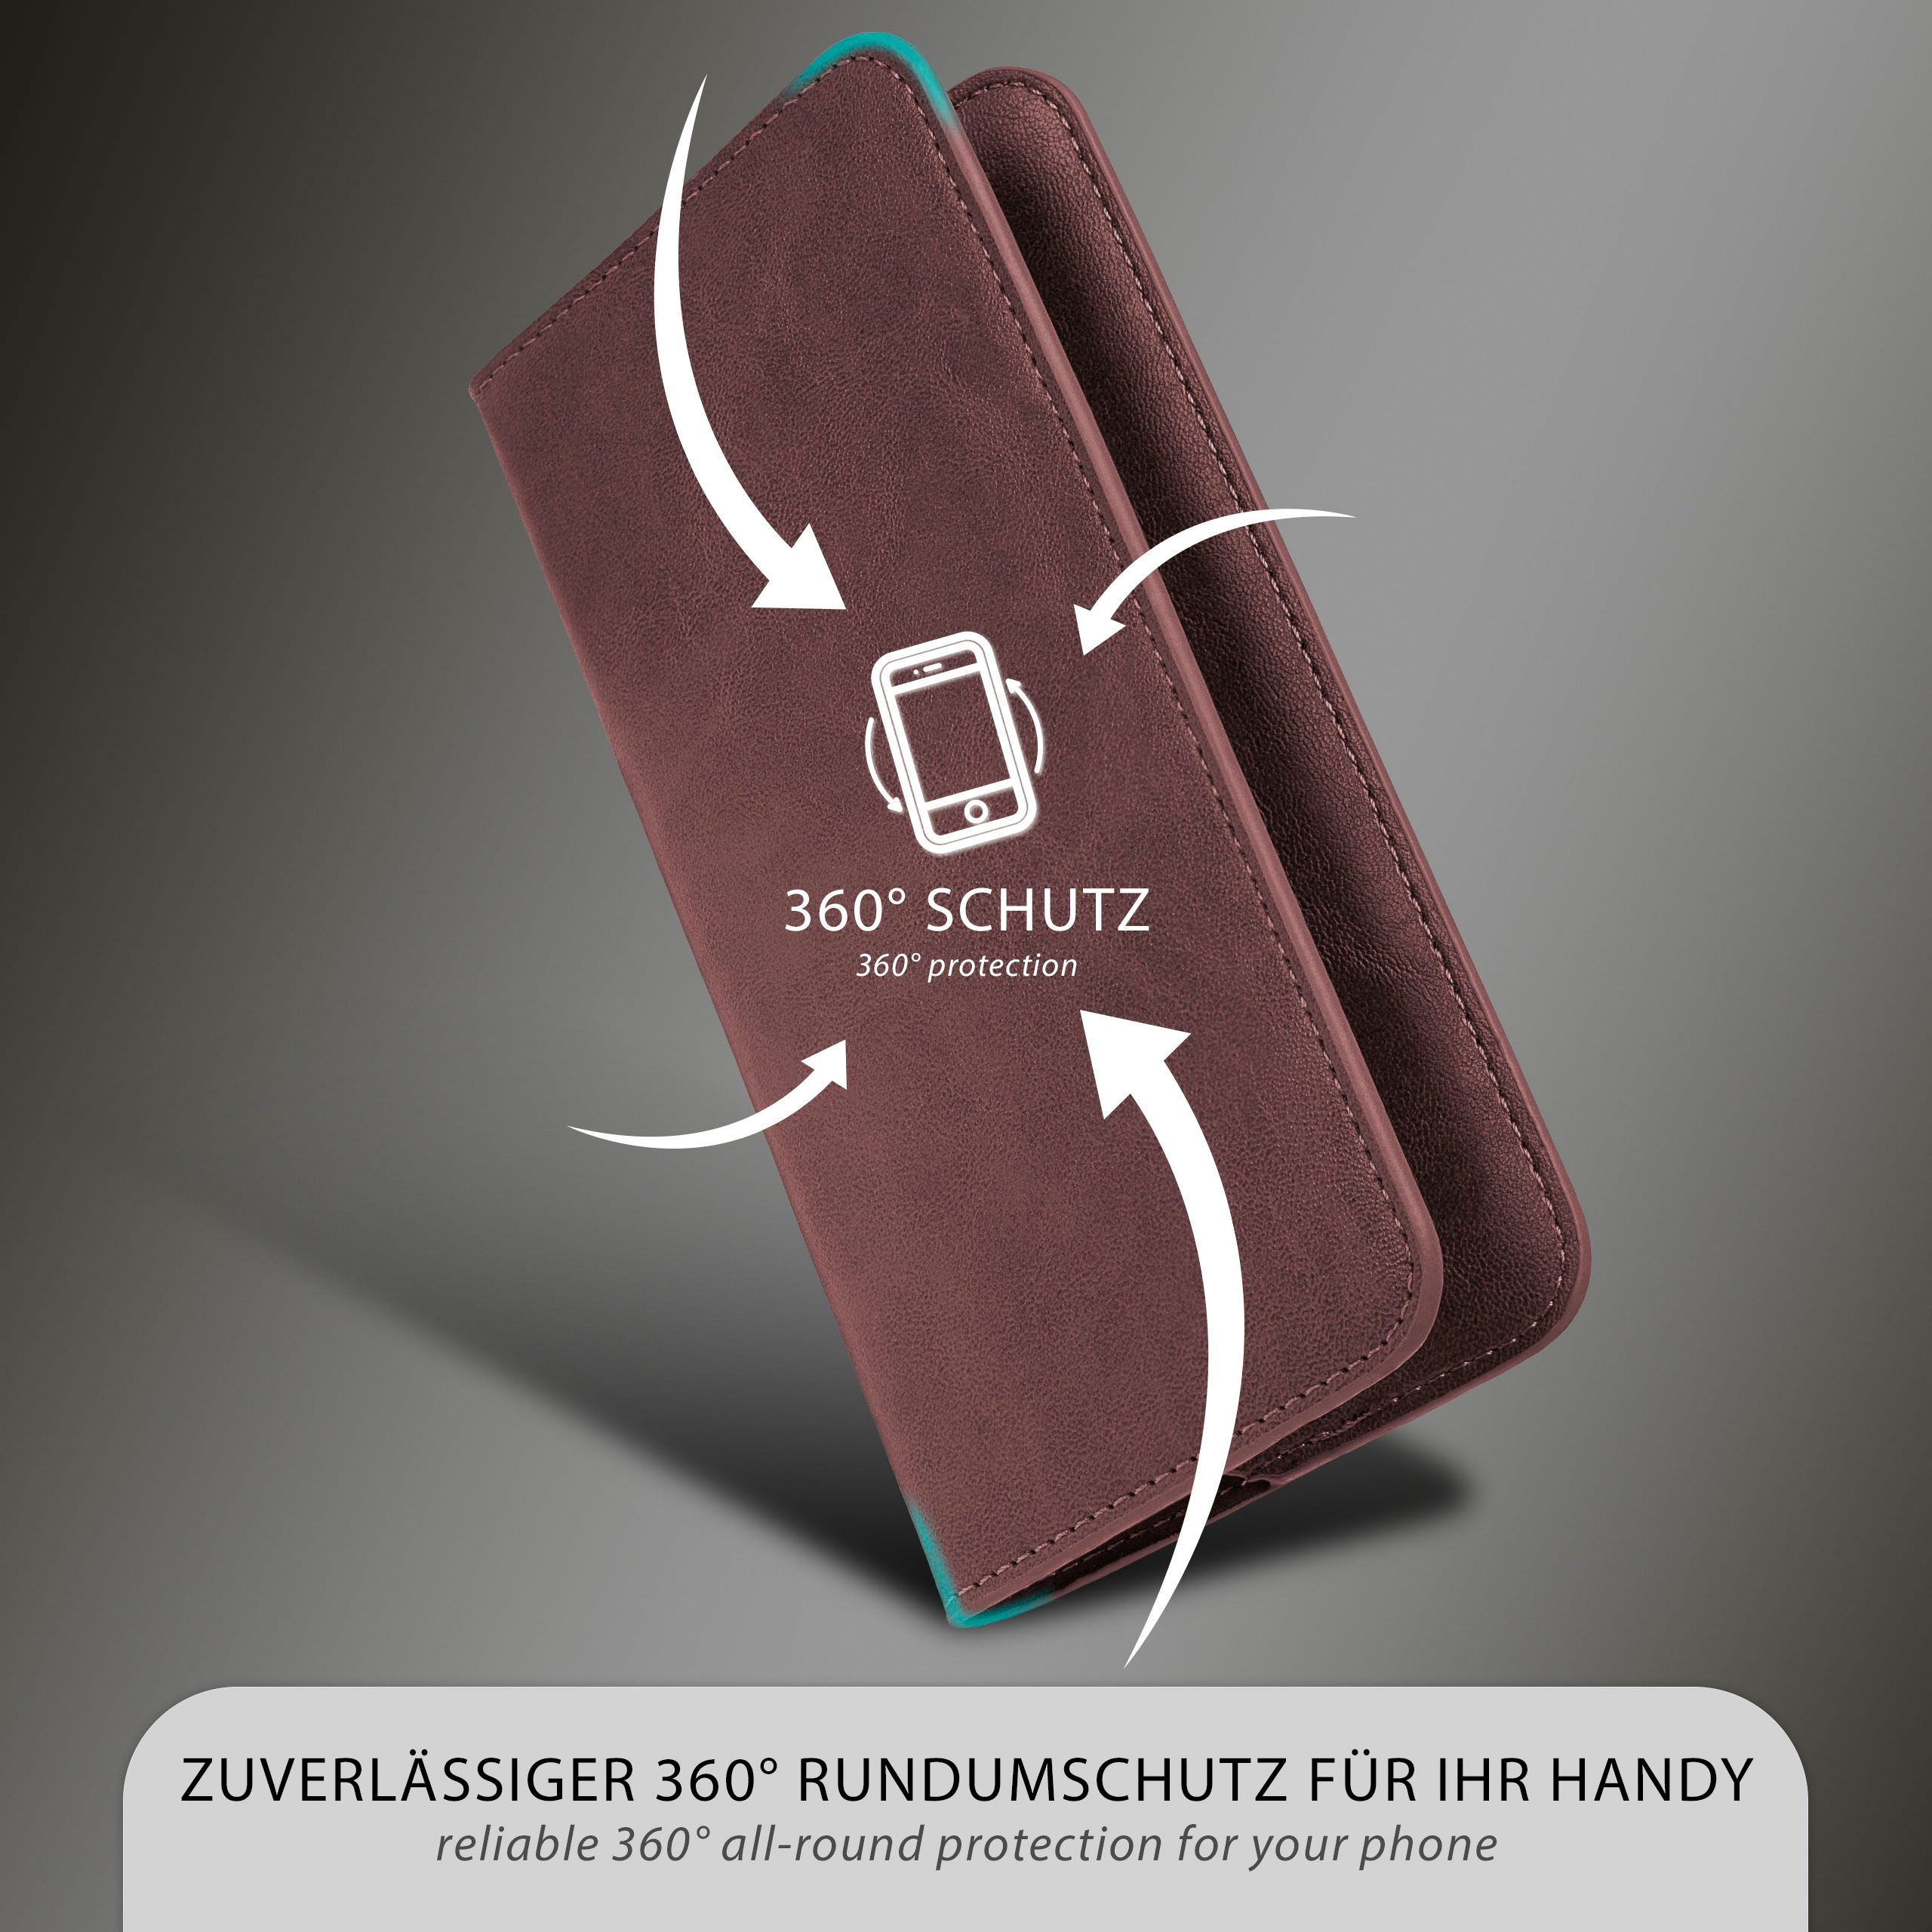 Flip MOEX Galaxy Cover, (2018), Weinrot A6 Purse Samsung, Case,